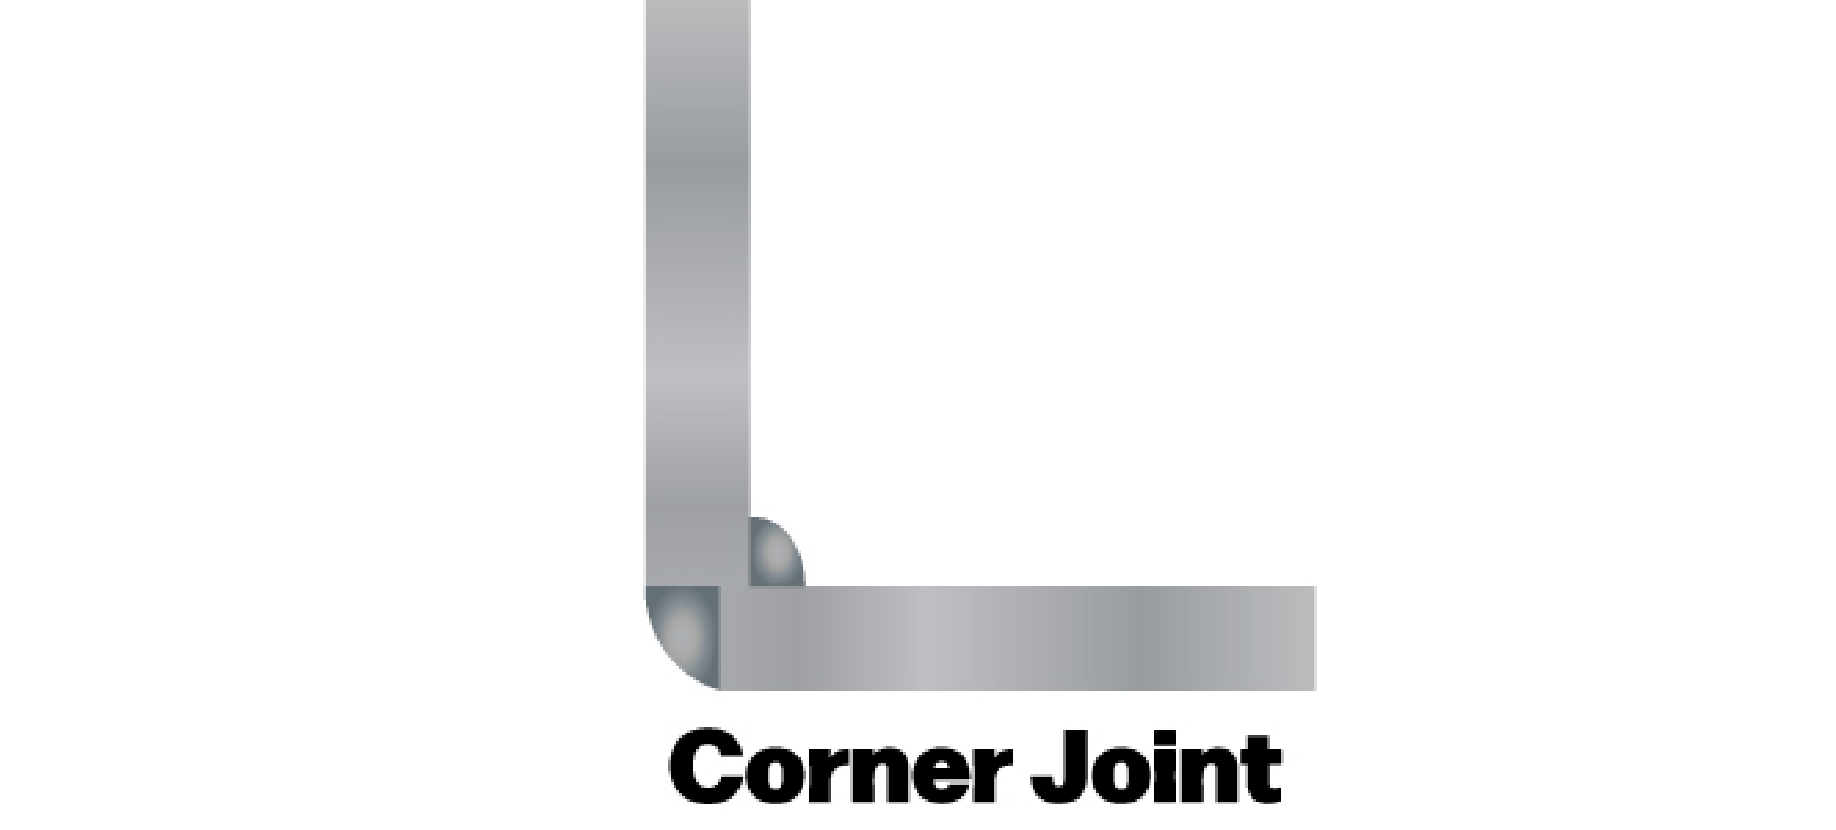 Corner Joint Graphic